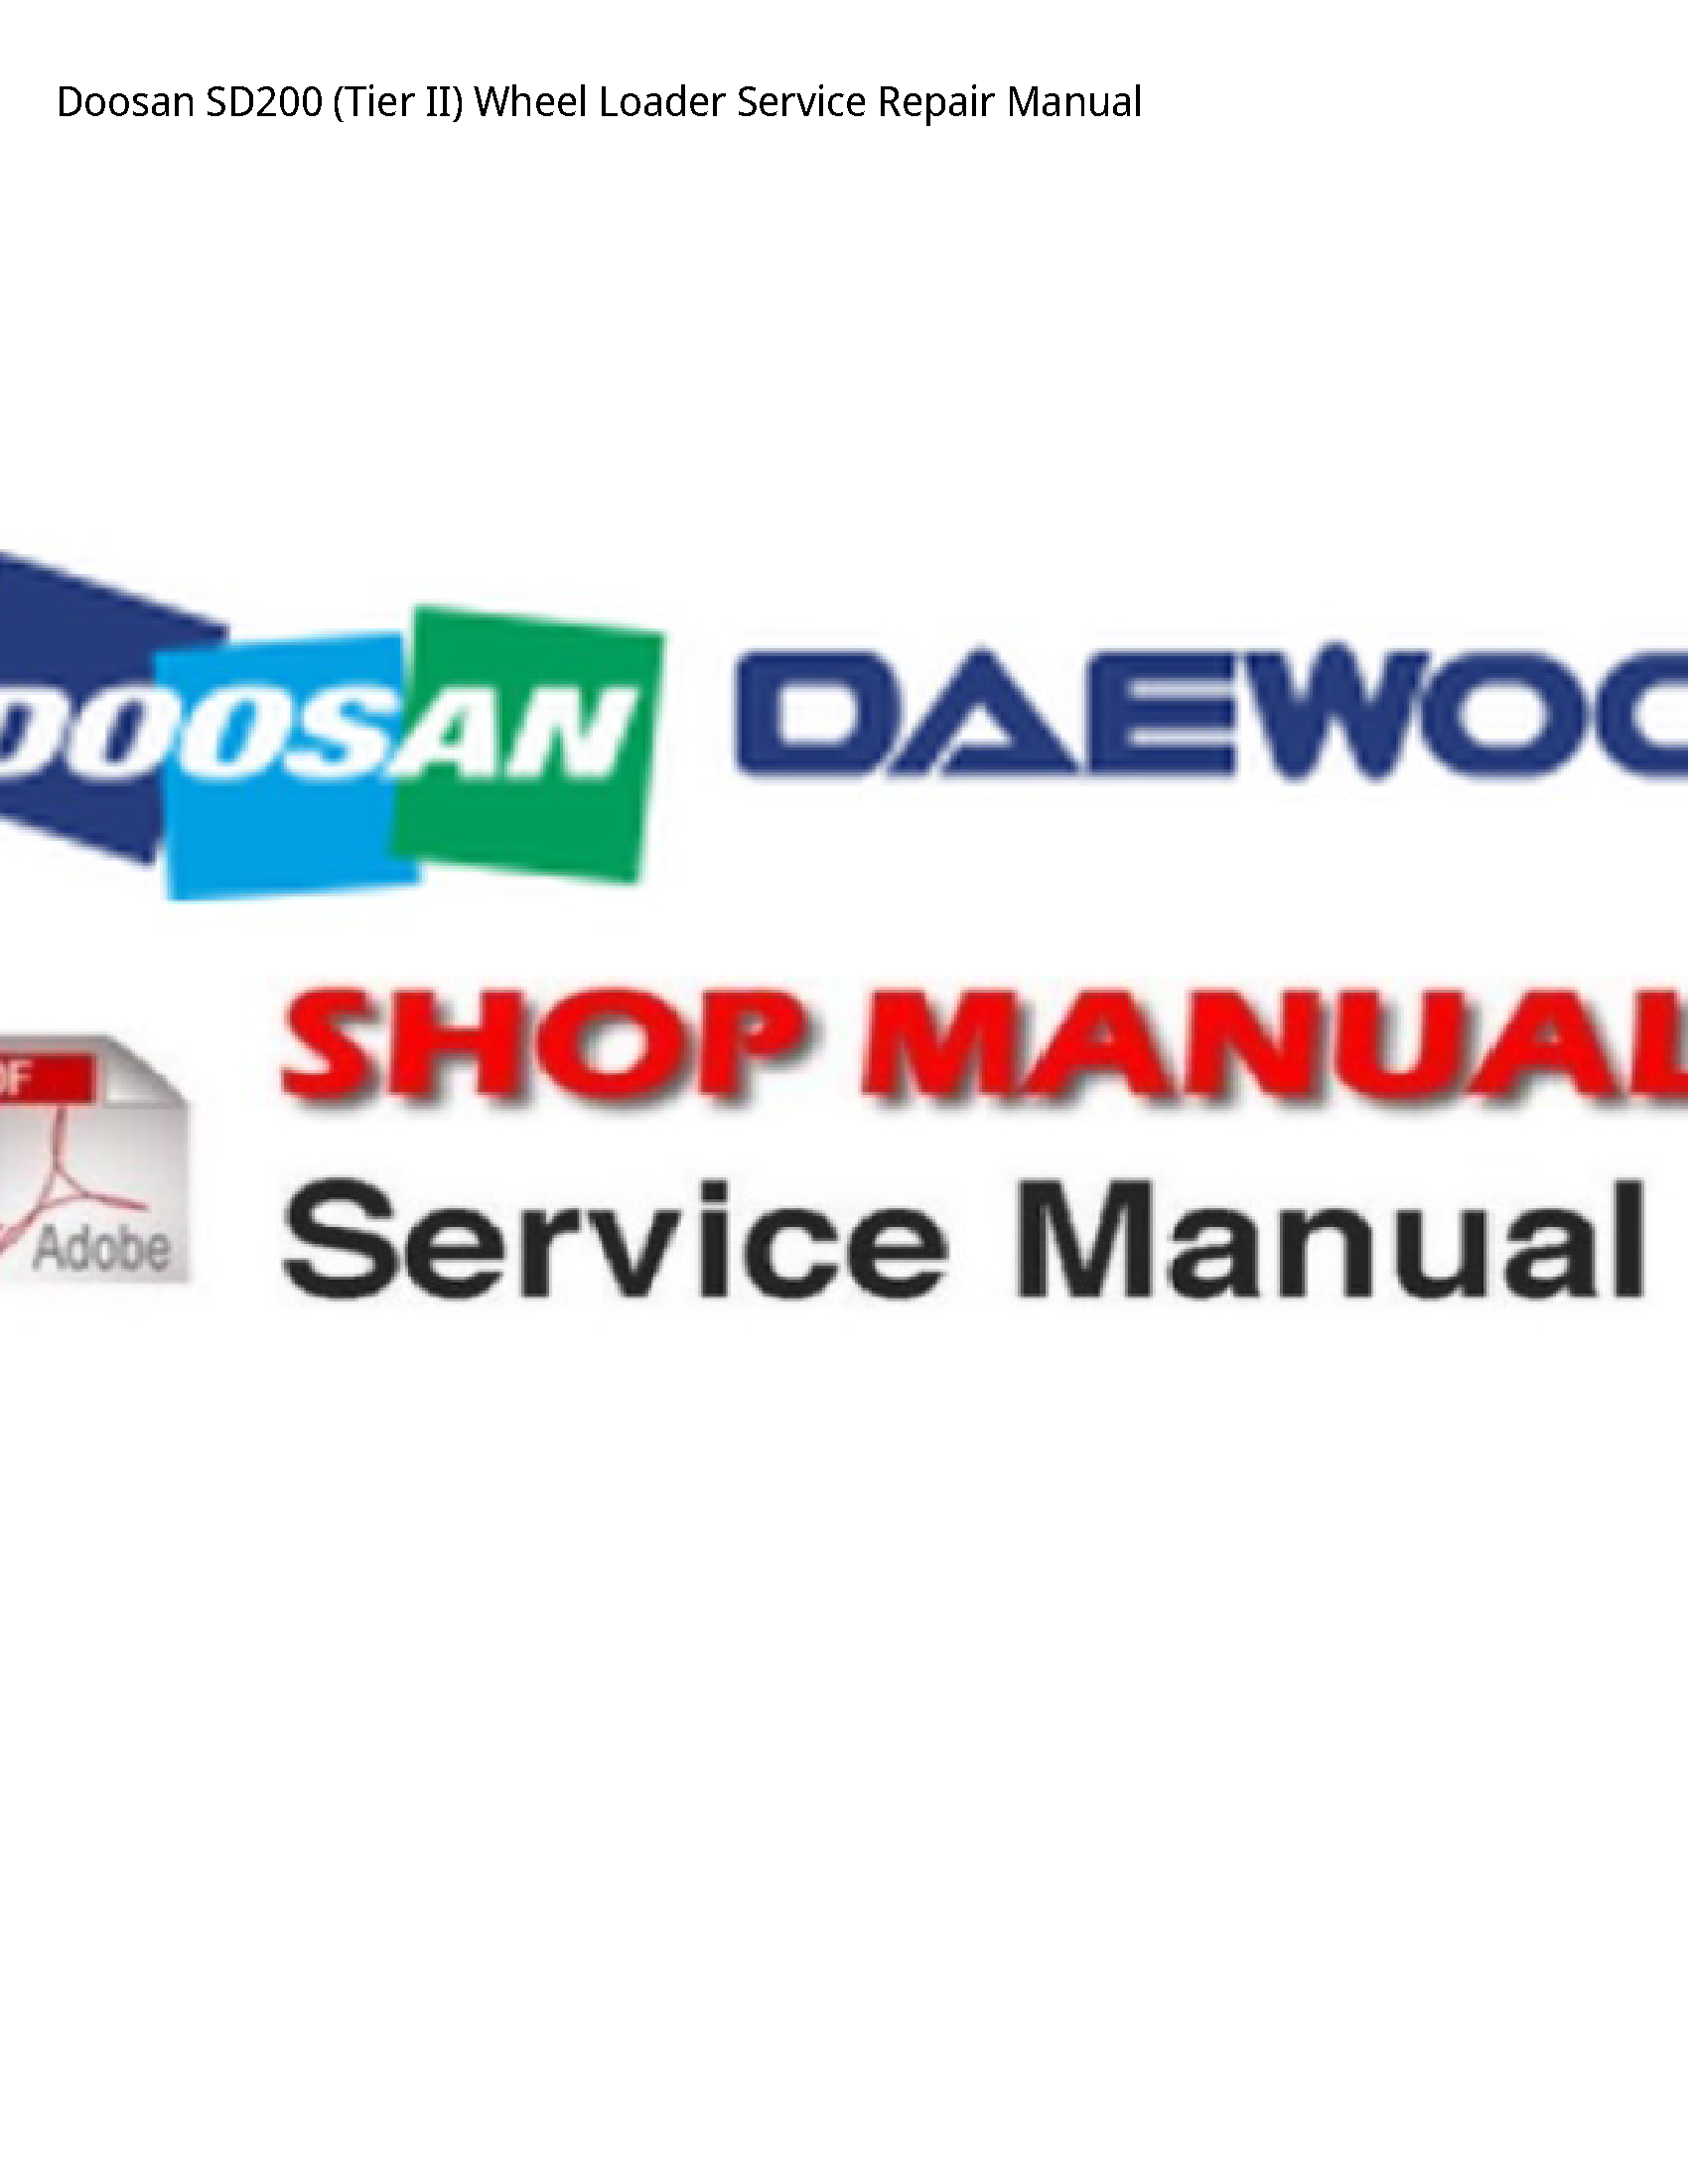 Doosan SD200 (Tier II) Wheel Loader manual